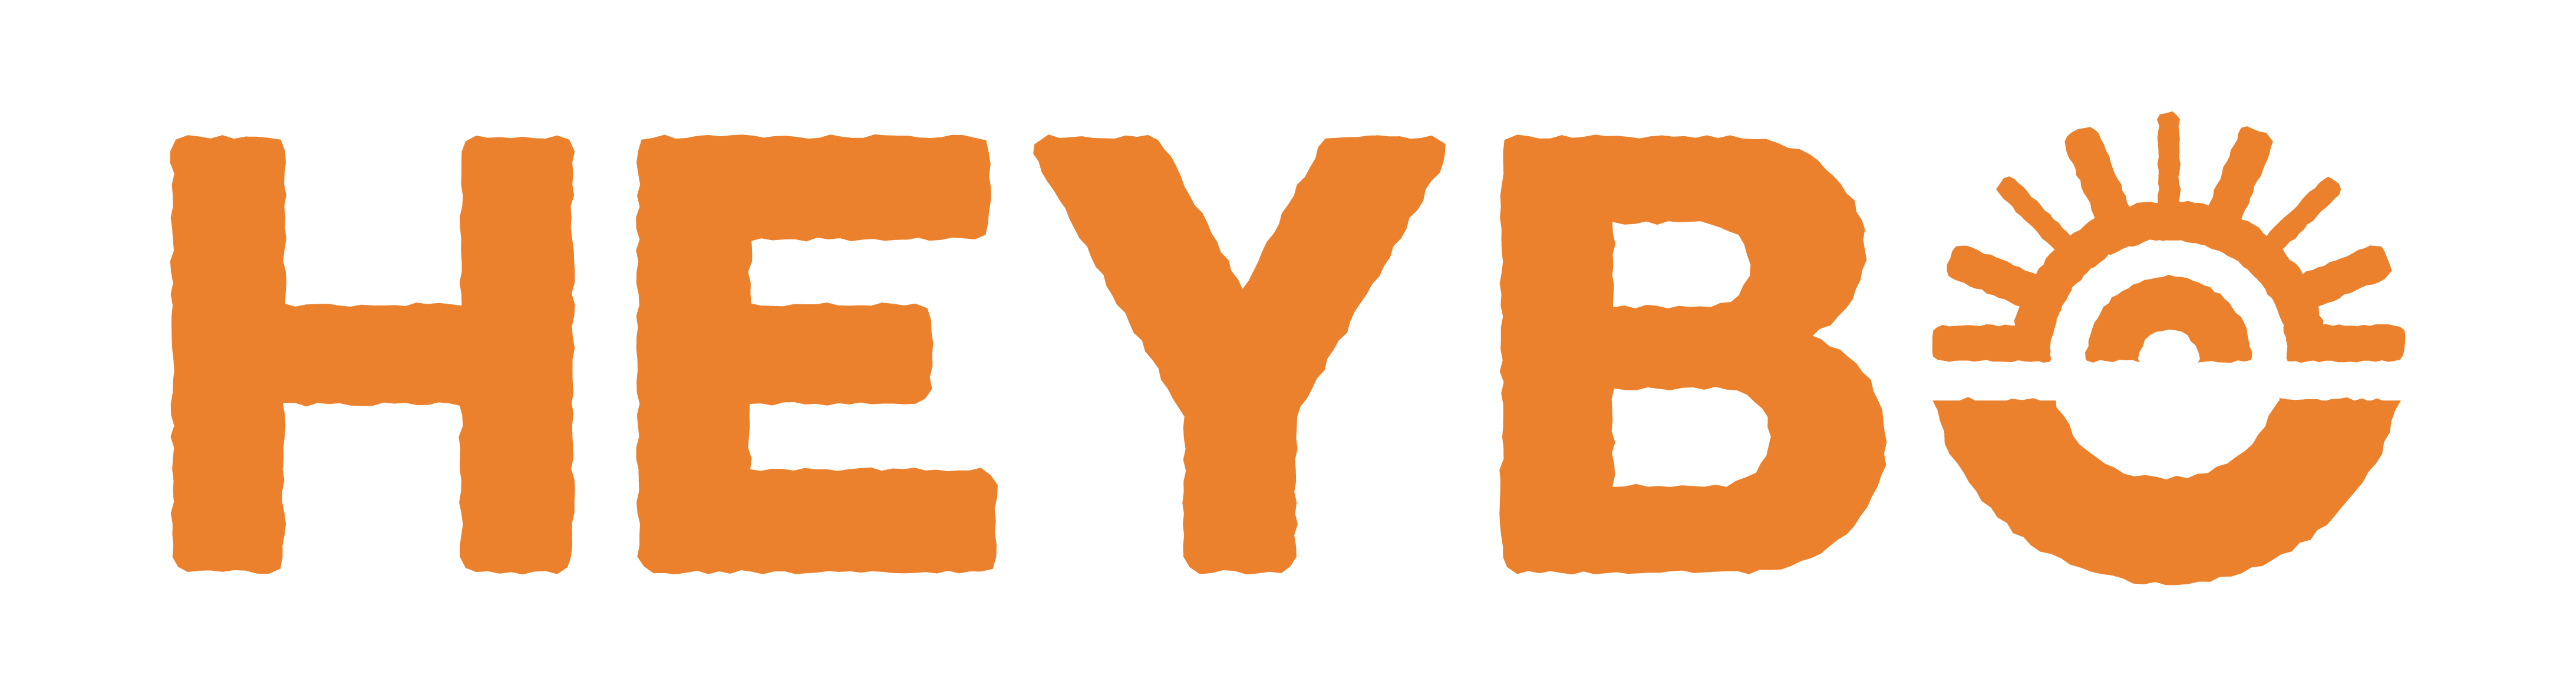 Heybo Logo